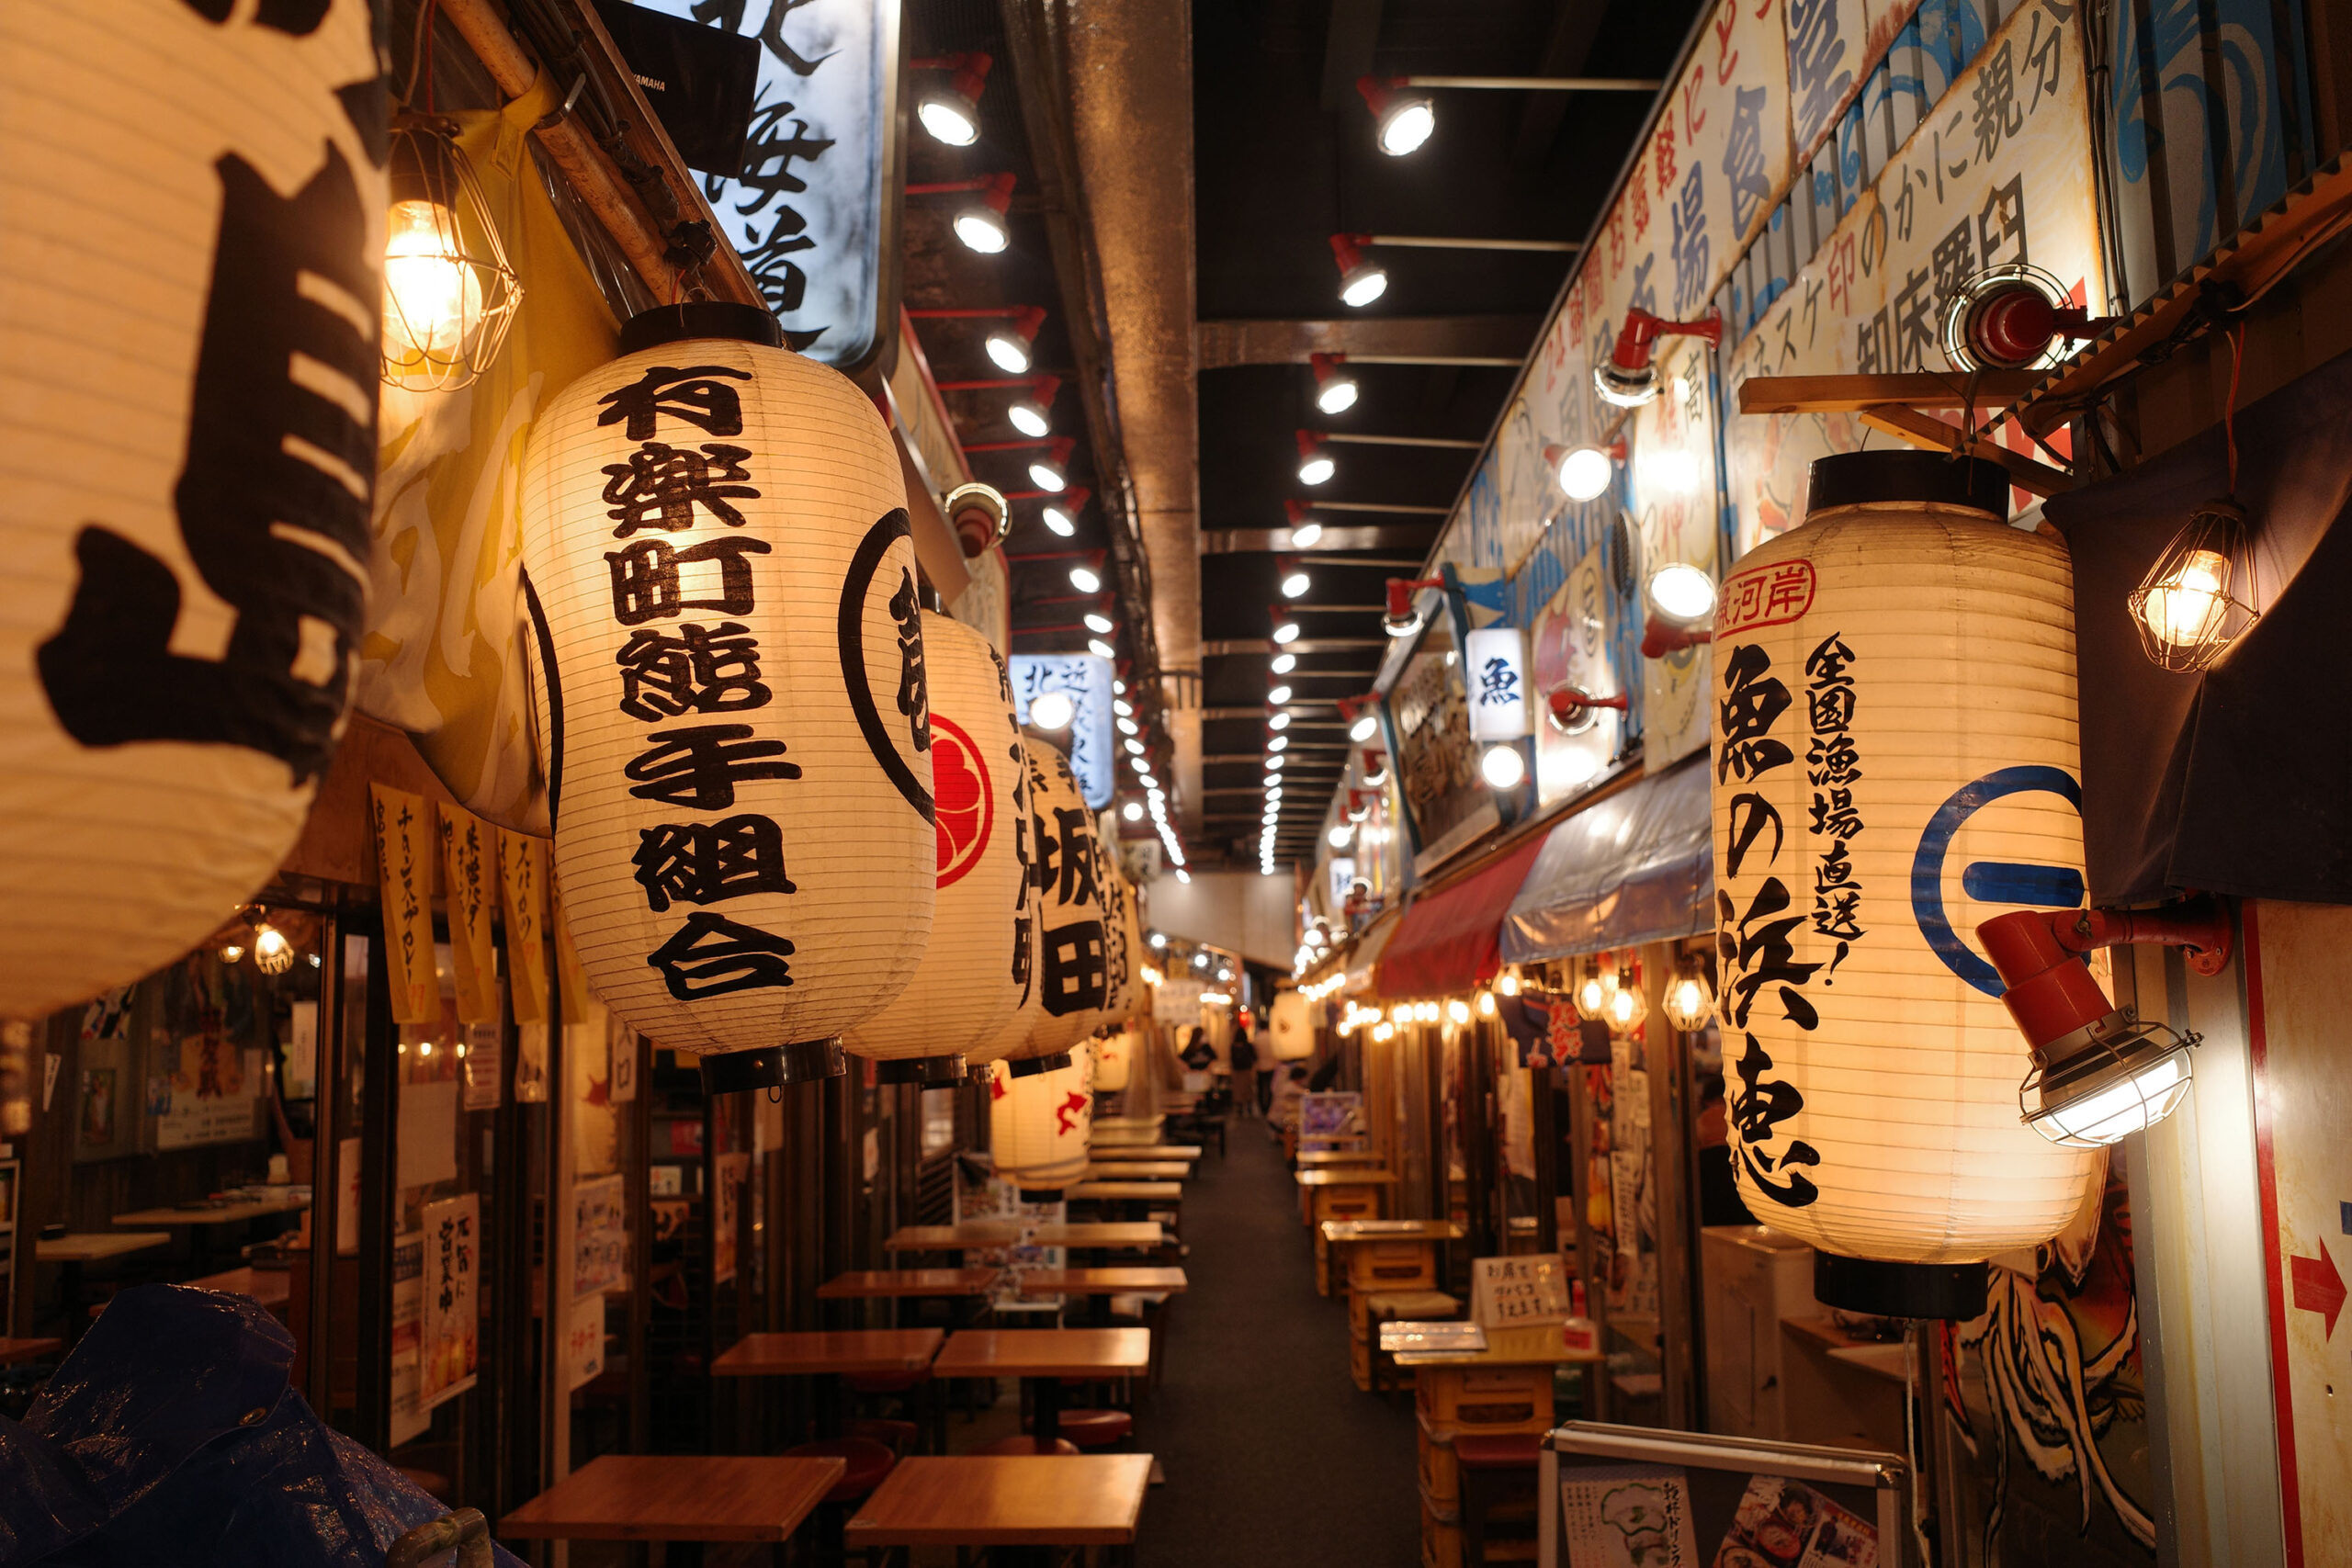 Yurakucho, Tokyo, Japan - June 10 2022: A food alley packed with izakaya restaurants and bars in Yurakucho.